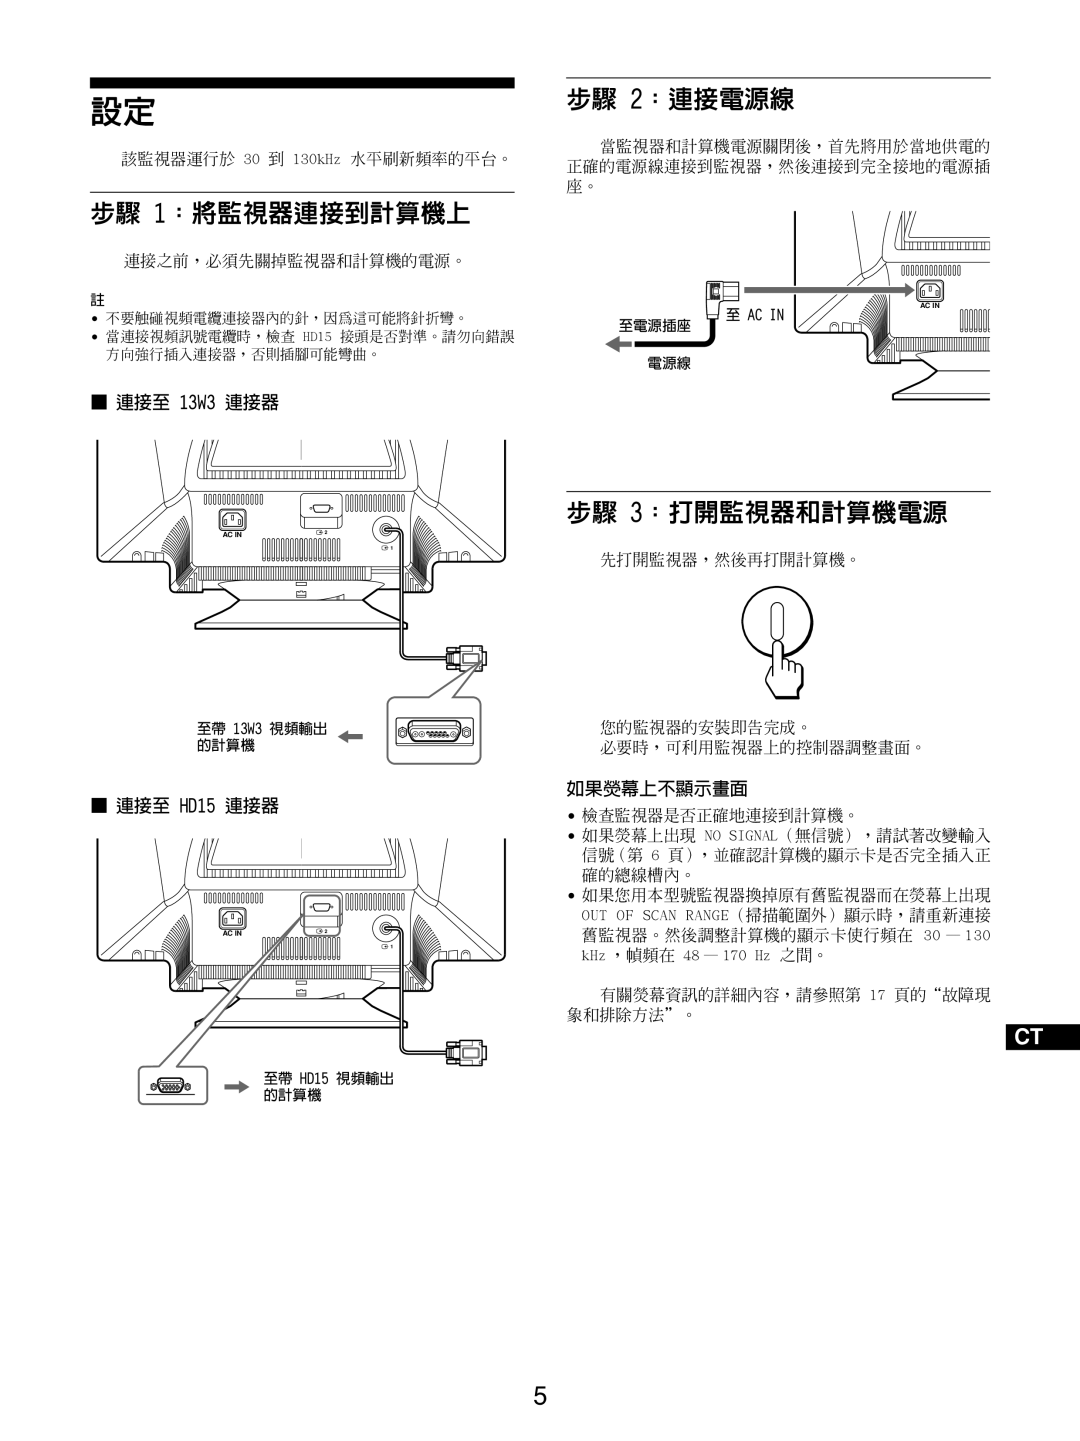 Sony GDM-5510 operating instructions 步驟 1：將監視器連接到計算機上, 步驟 2：連接電源線, 步驟 3：打開監視器和計算機電源, 連接至 13W3 連接器, 連接至 HD15 連接器, 如果熒幕上不顯示畫面 